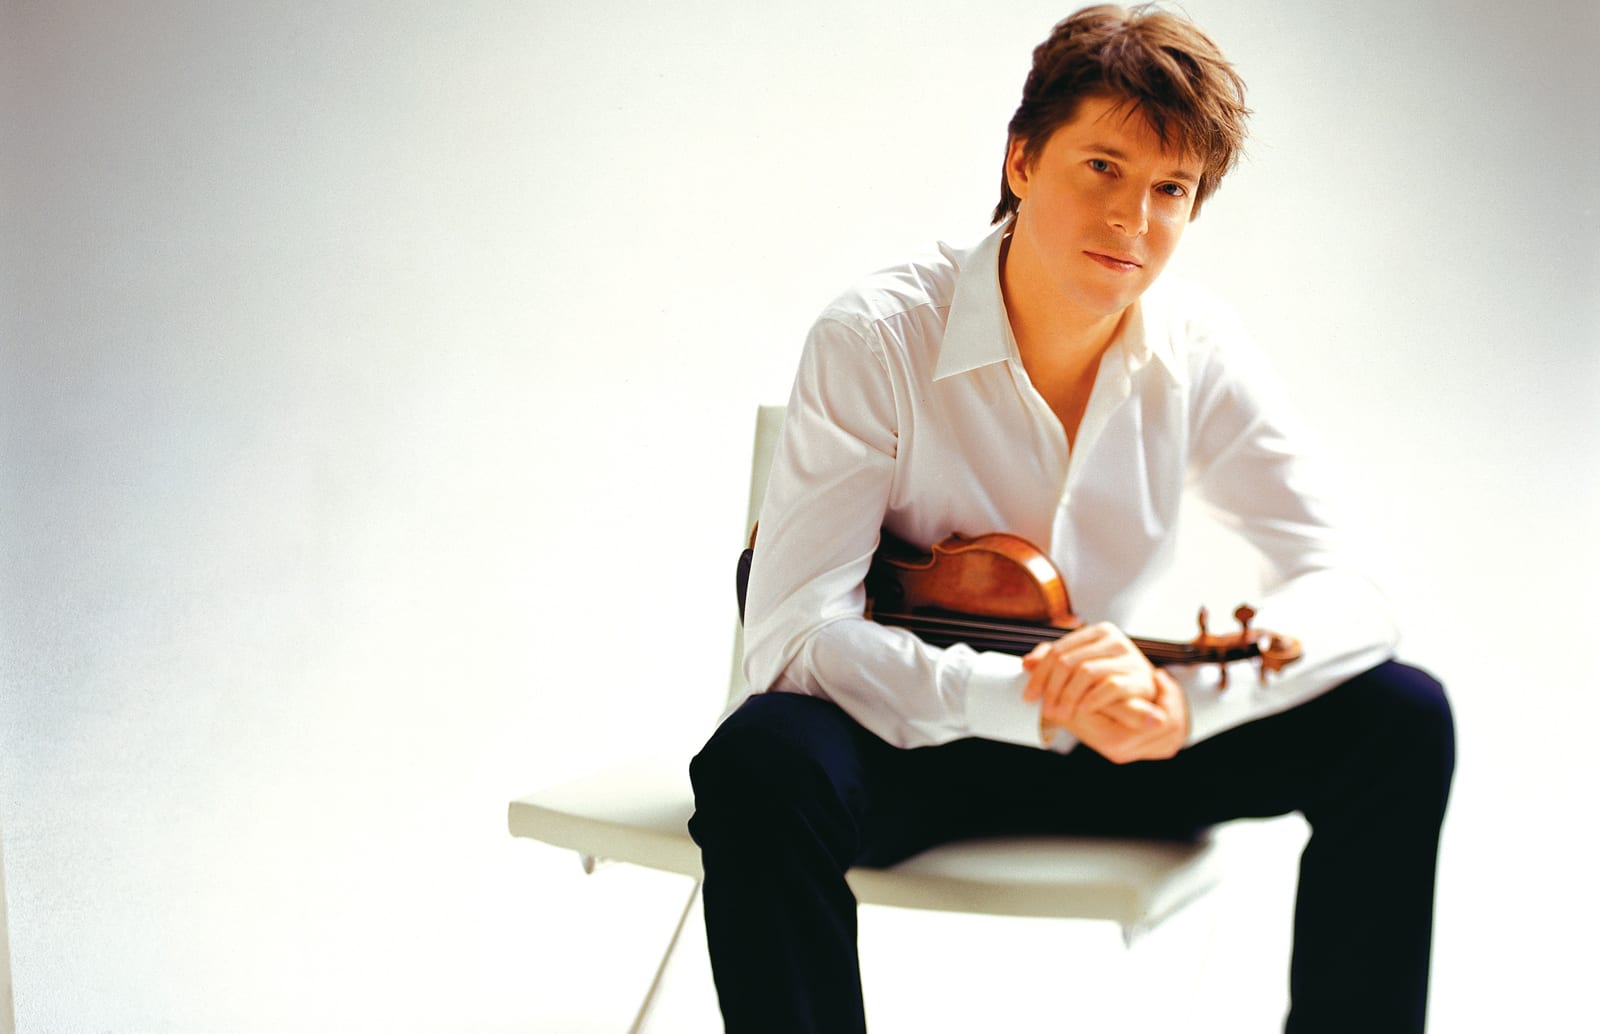 American violinist Joshua Bell